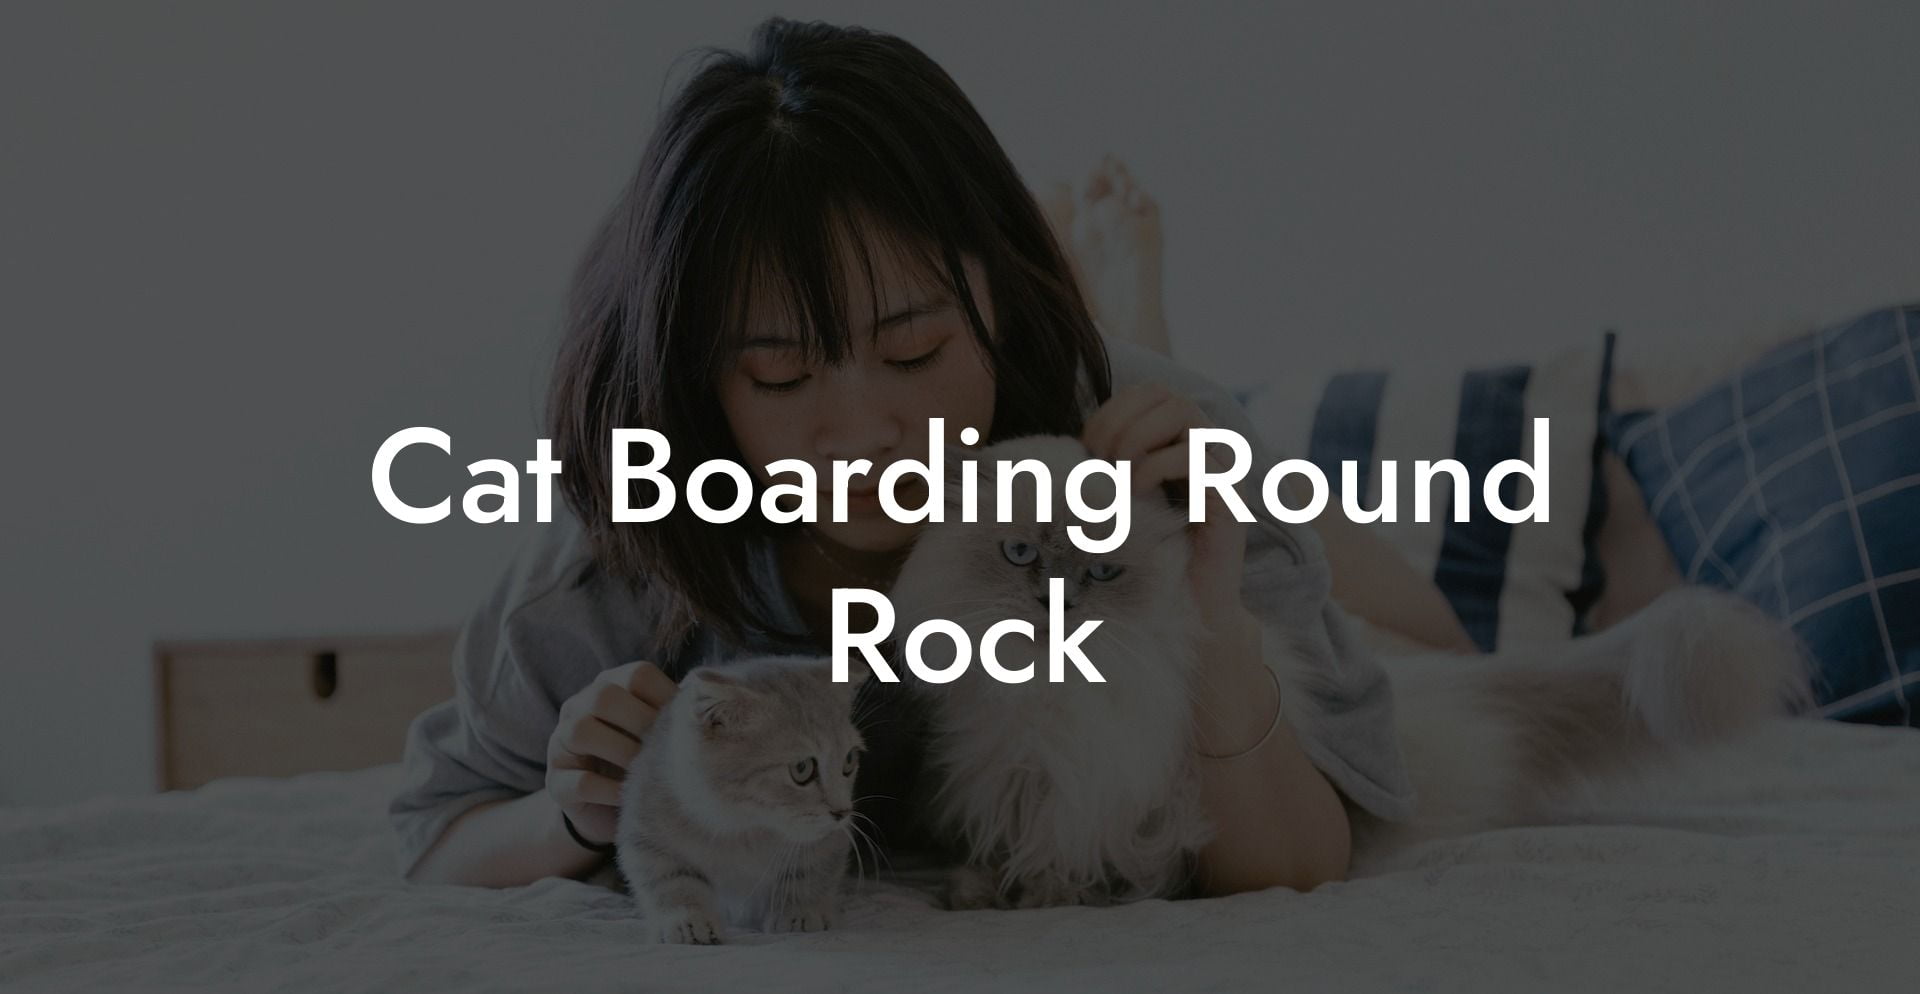 Cat Boarding Round Rock